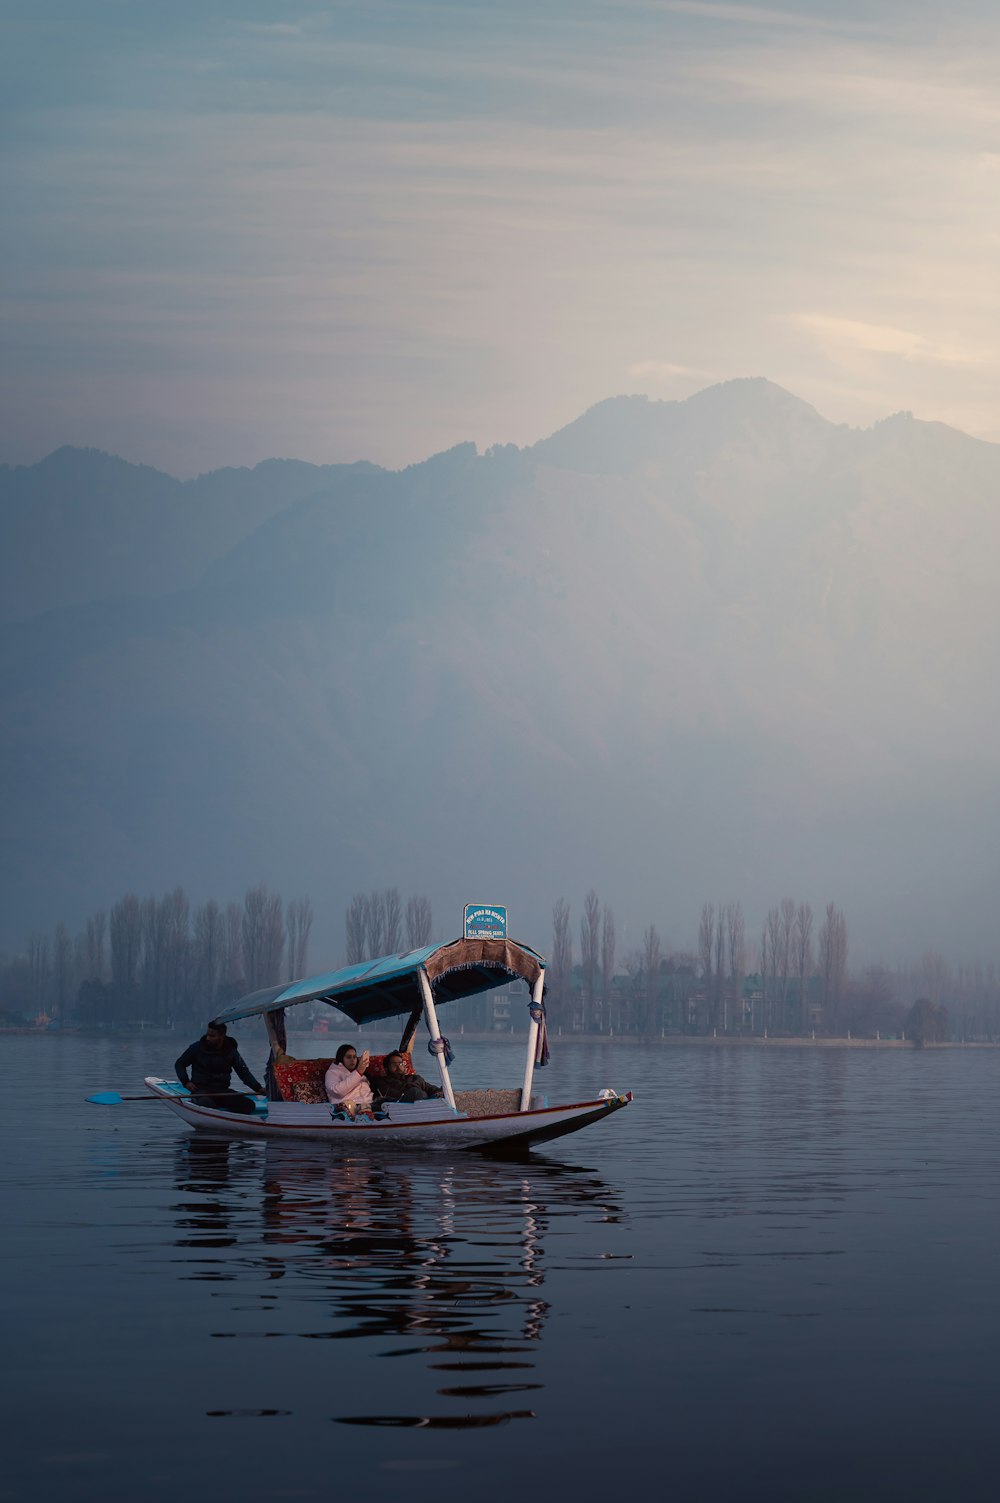 Un hombre en un barco en medio de un lago